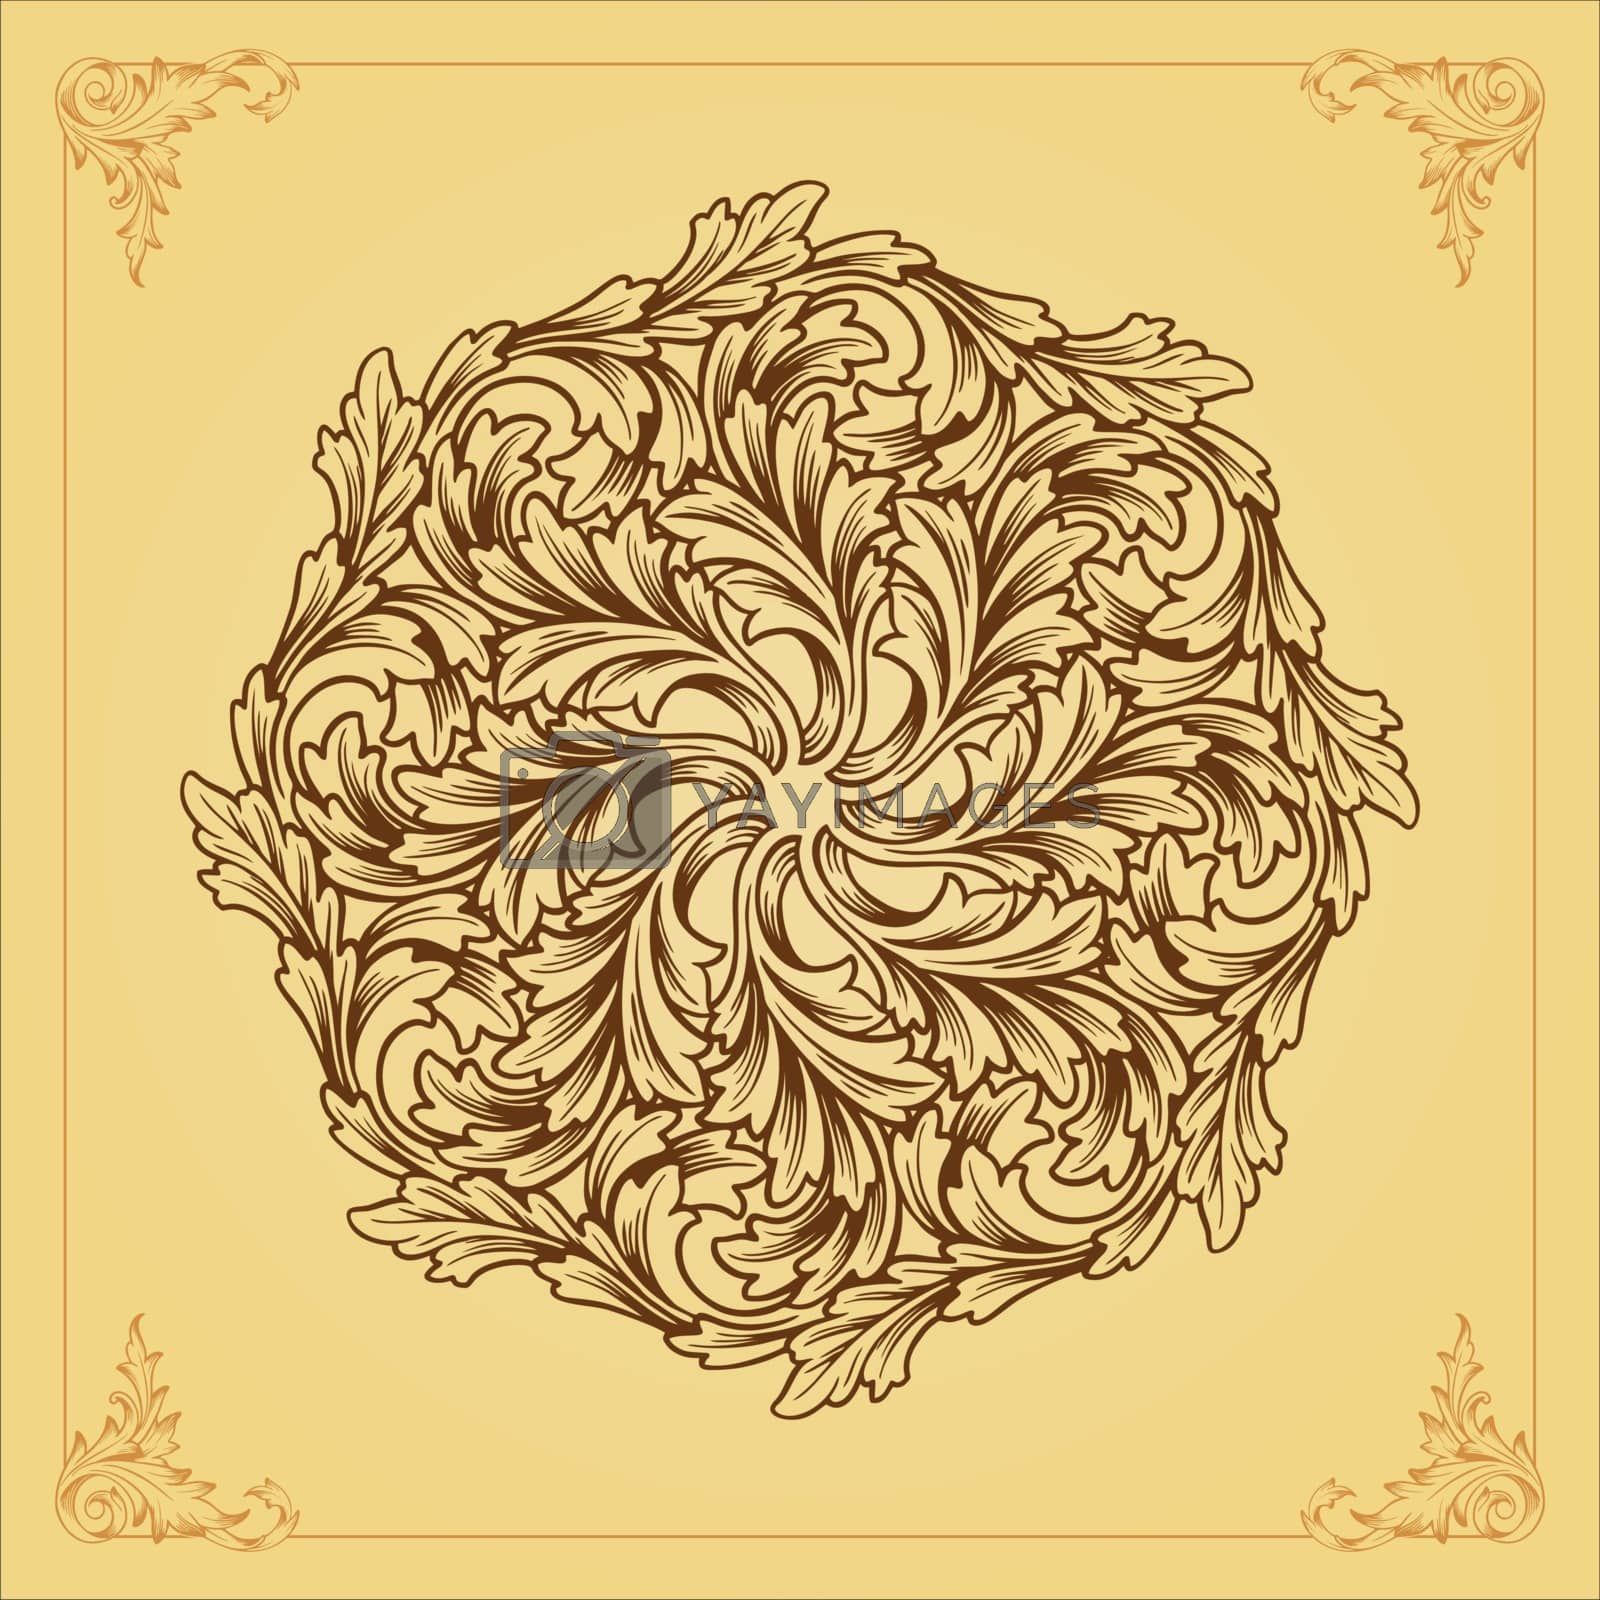 Royalty free image of Beatiful Mandala ornaments design flourish vector vintage your element set by art_graris